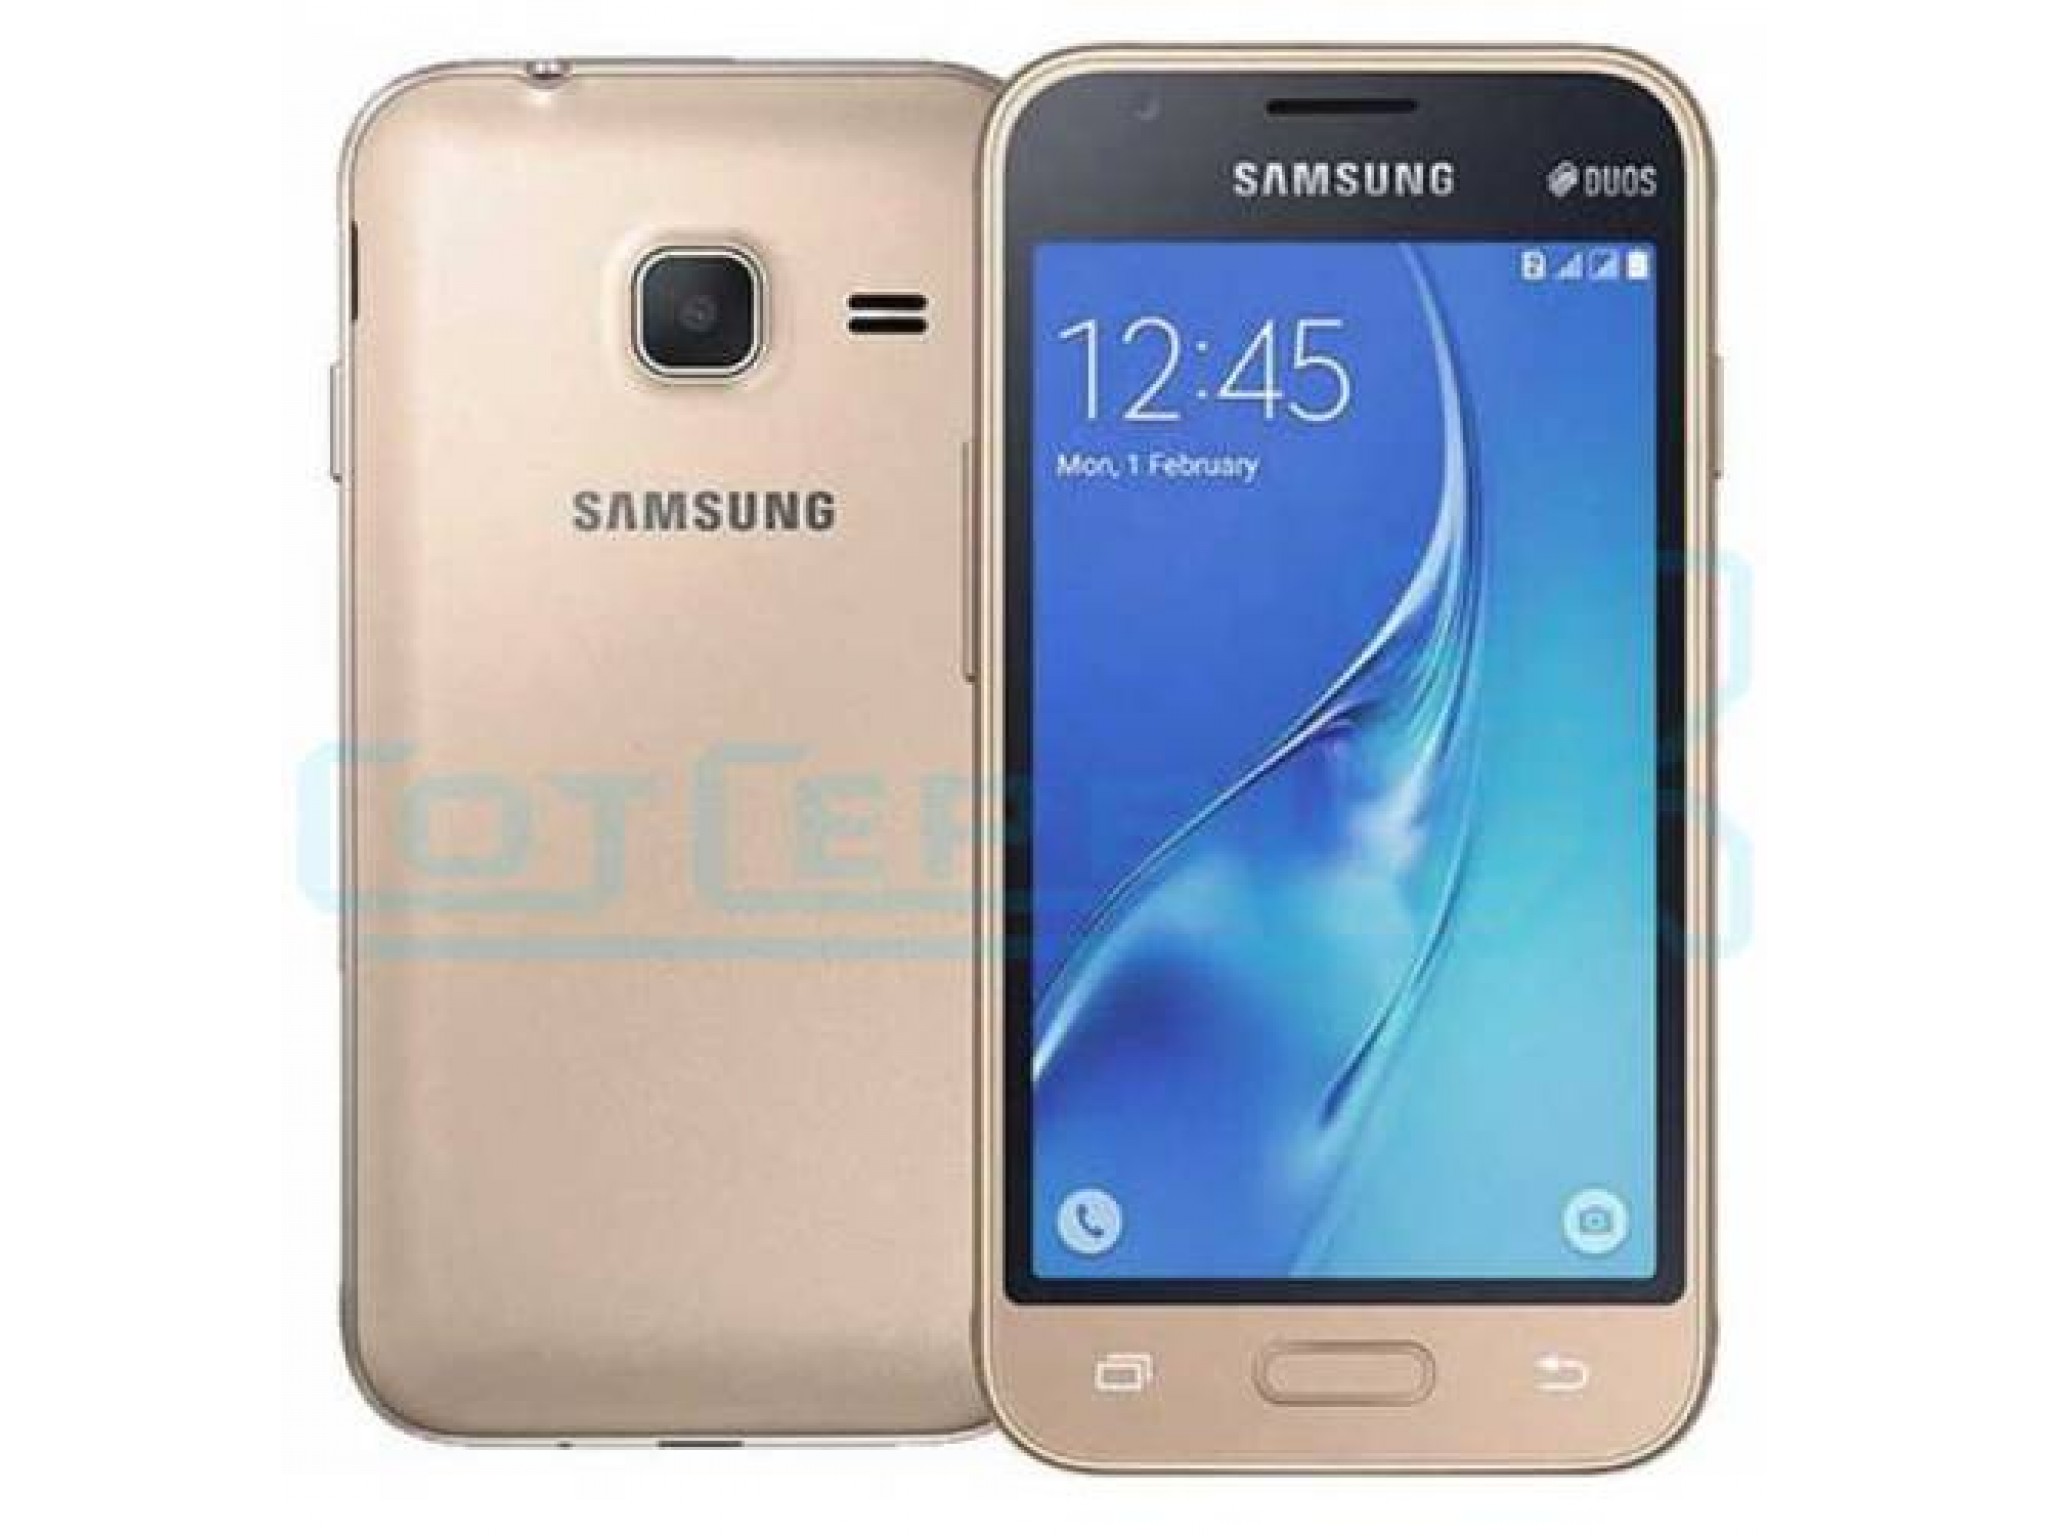 Samsung galaxy mini j105h. Samsung Galaxy j1 2016. Samsung j1 Mini. Samsung Galaxy j1 Mini 2016. Samsung Galaxy j1 (2016) 4g.